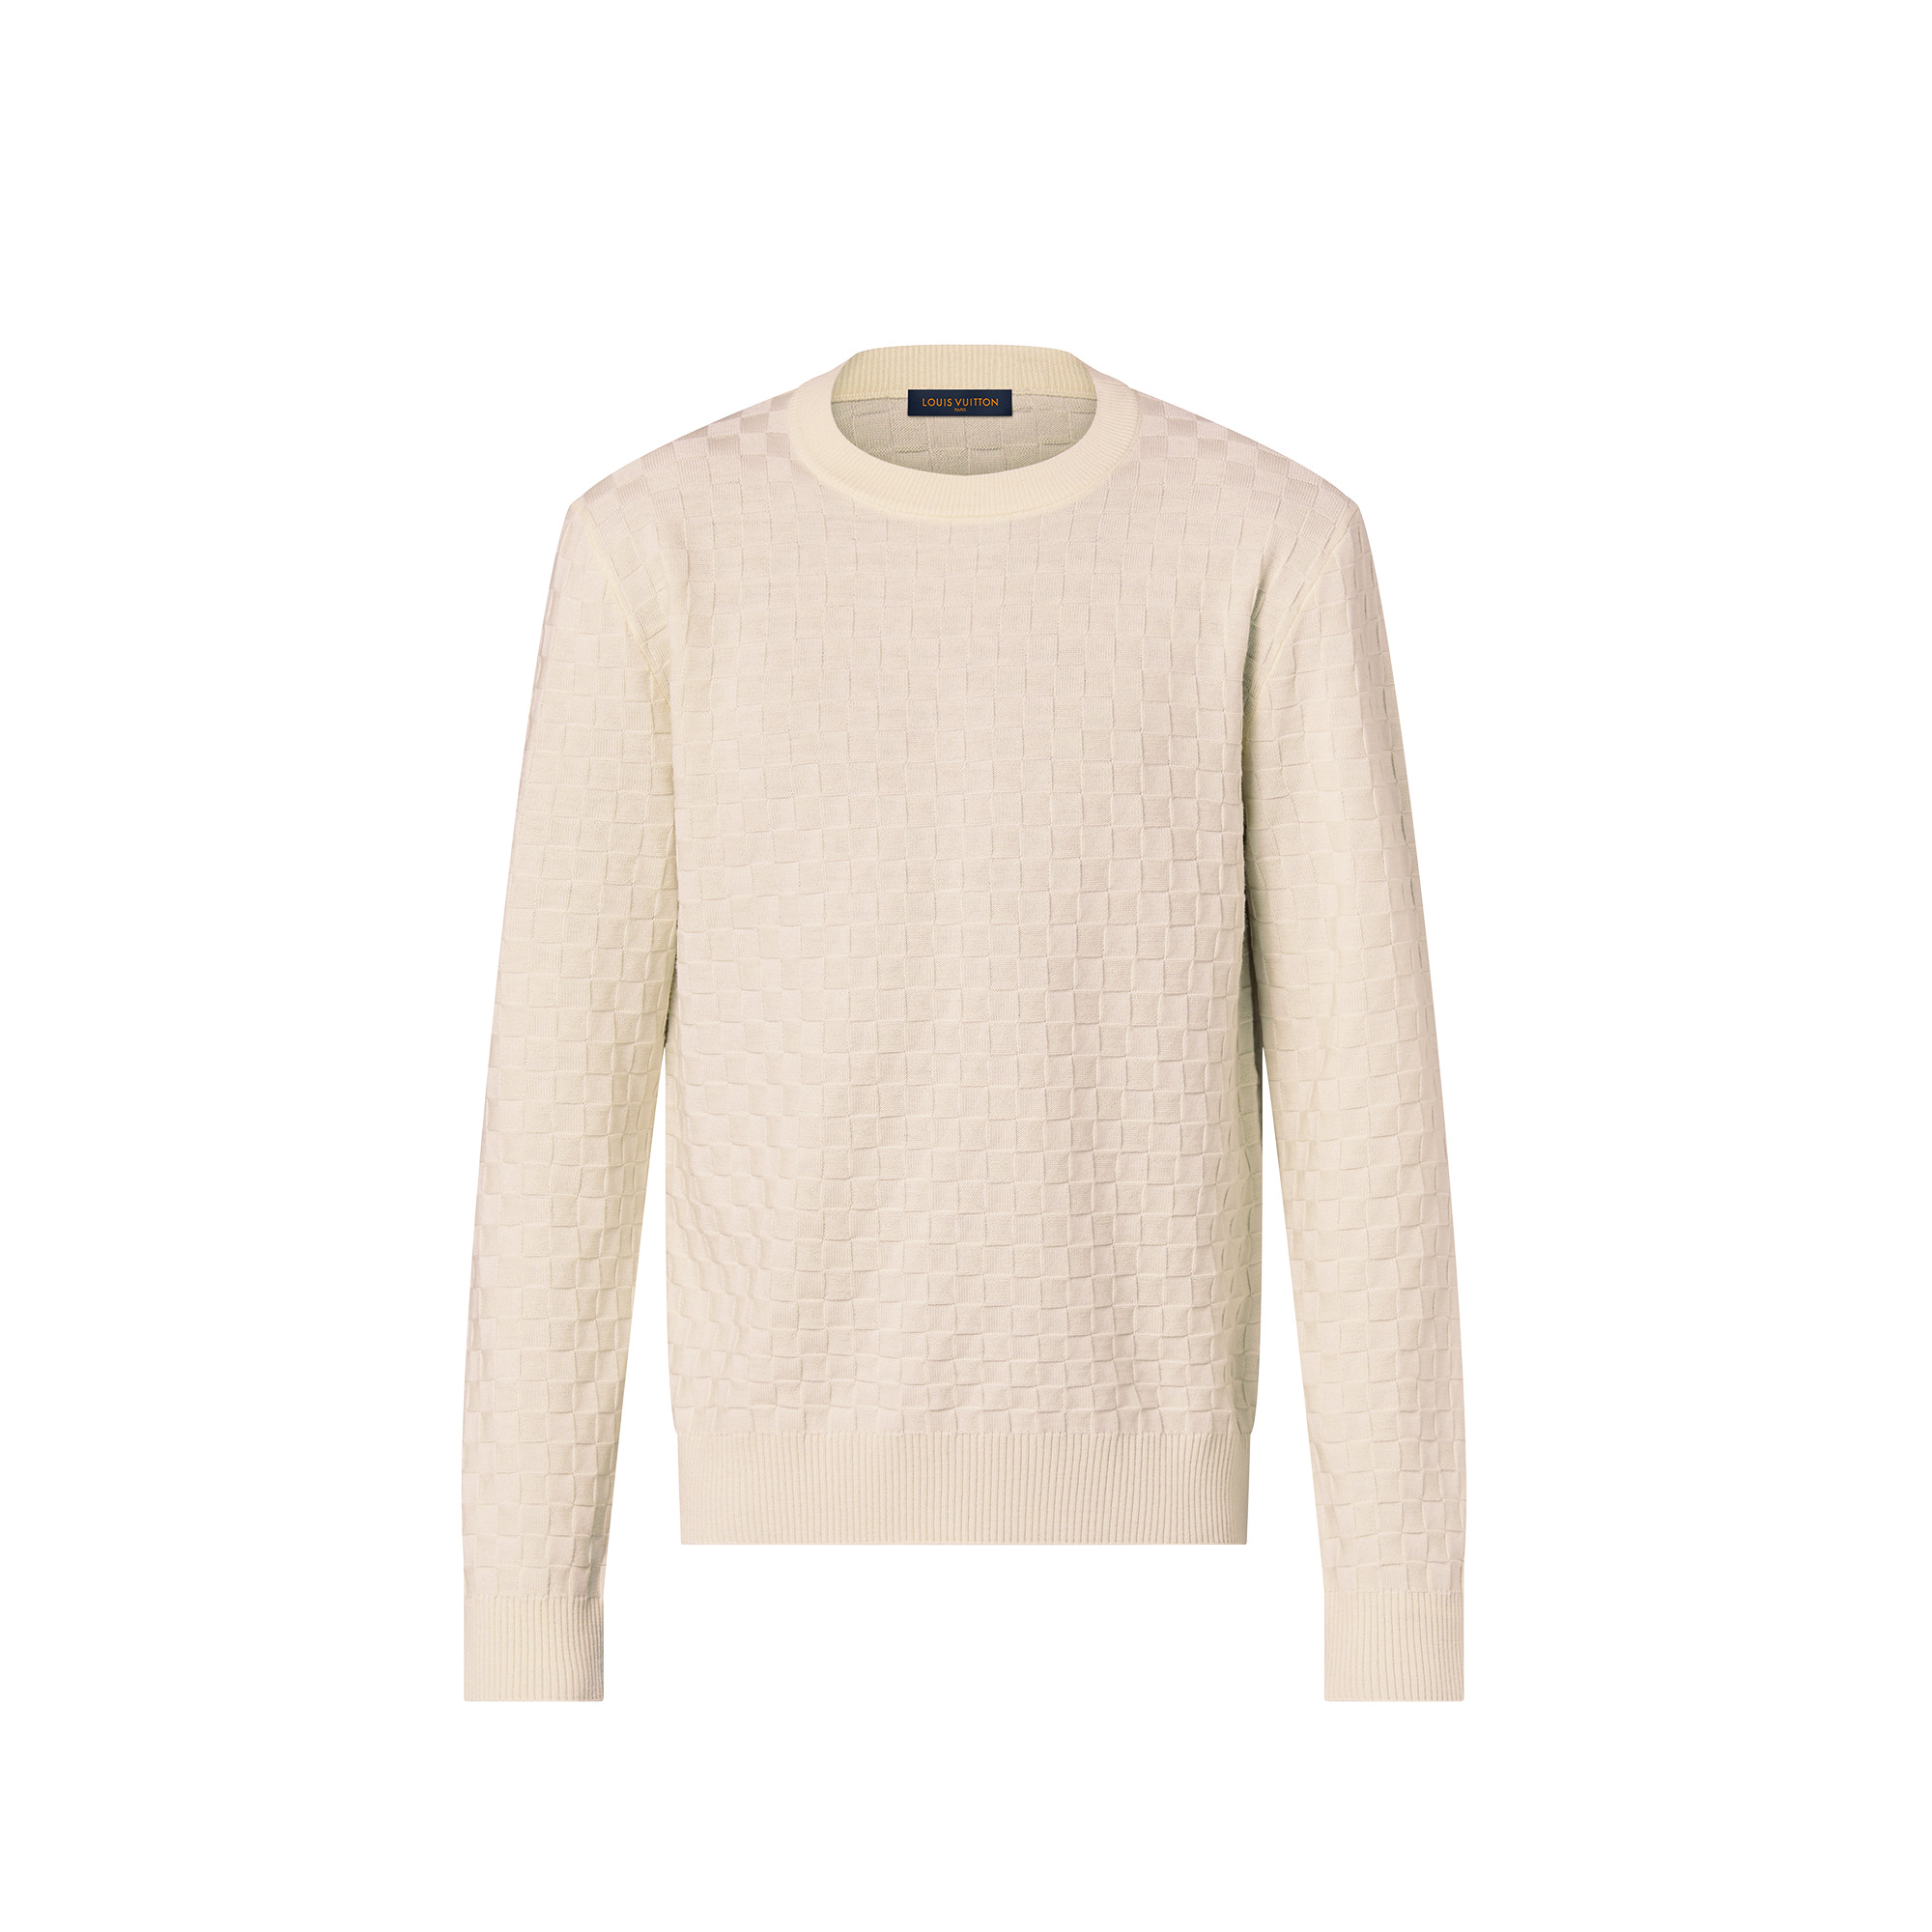 Louis Vuitton Men's Damier Signature Crewneck Sweater Wool